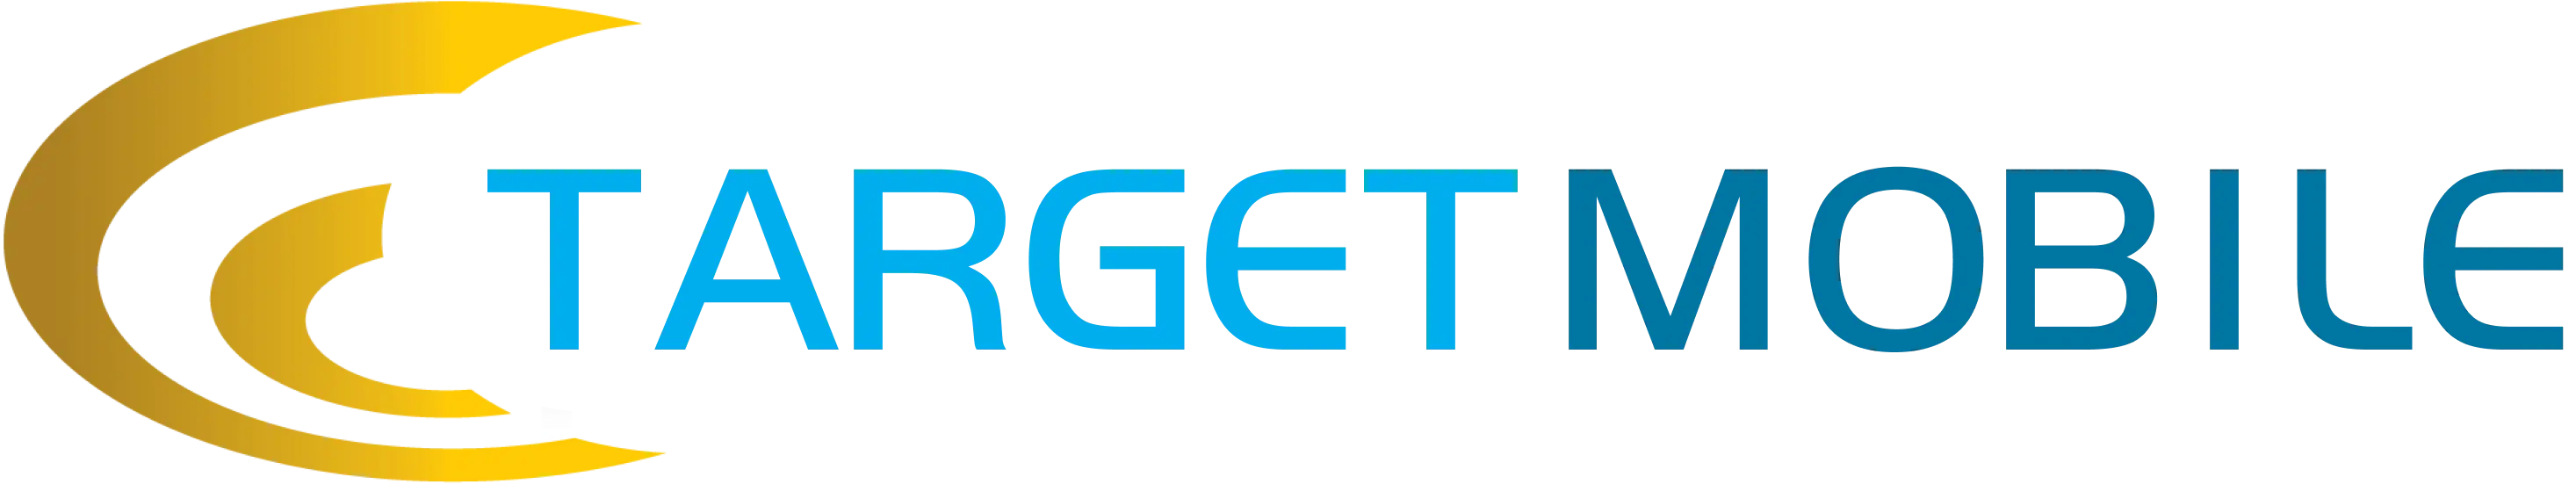 logo TargetWork